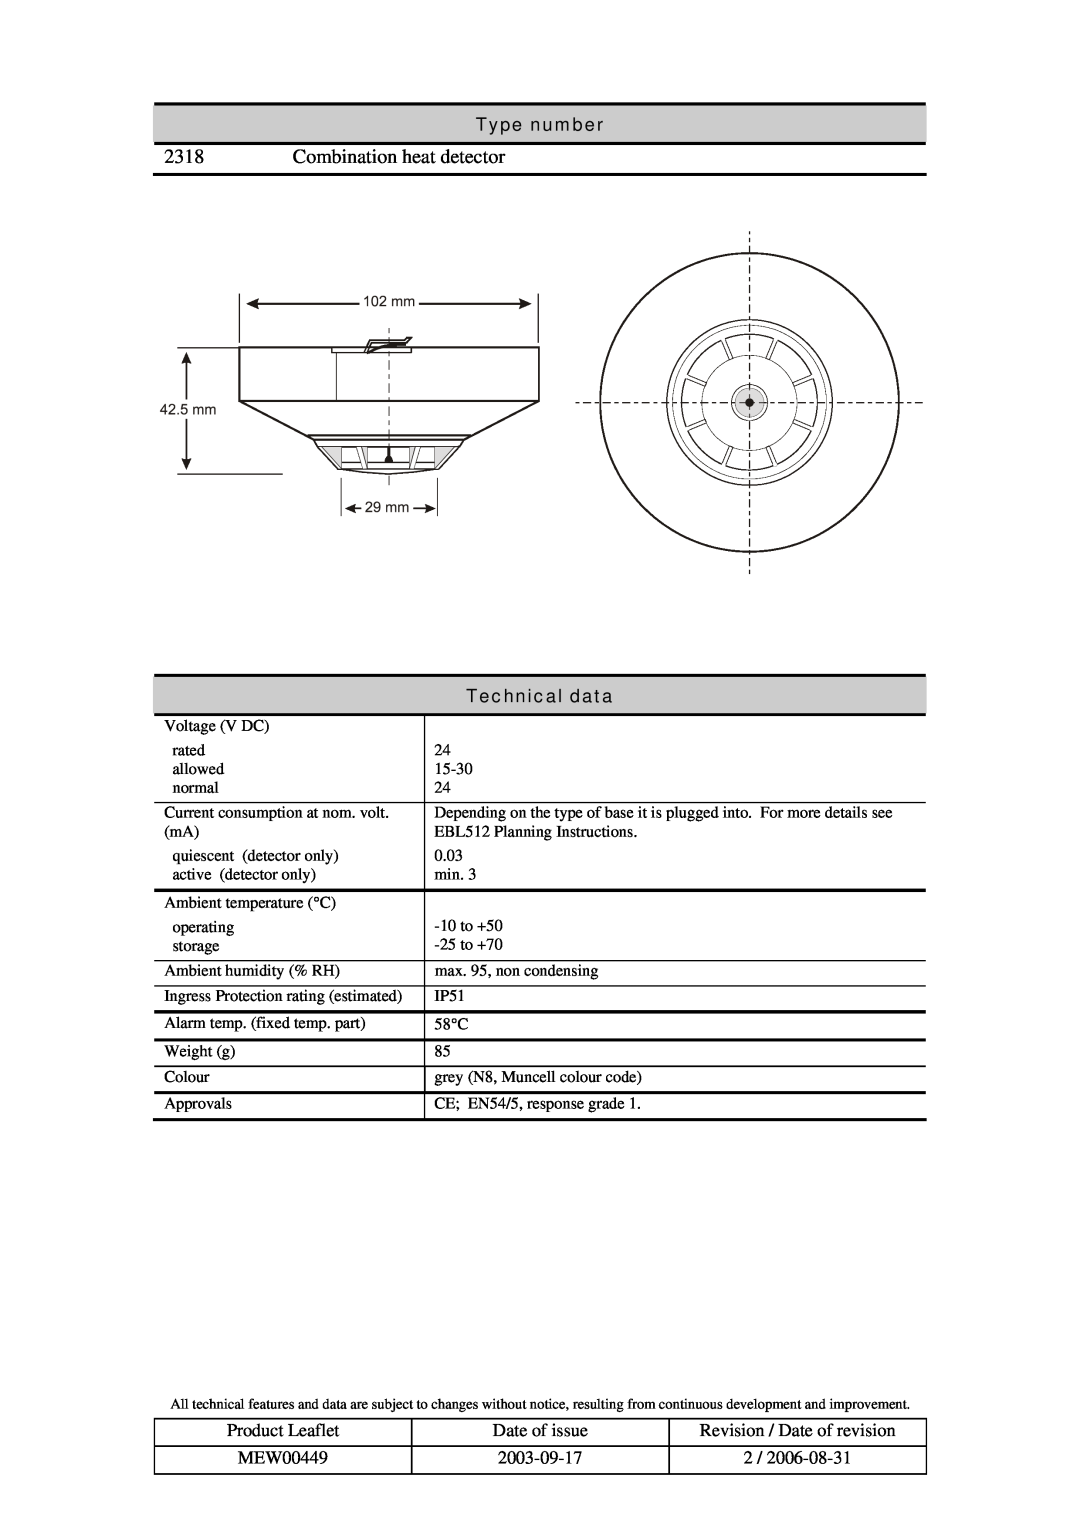 Panasonic 2318 manual Combination heat detector, Type number, Technical data 